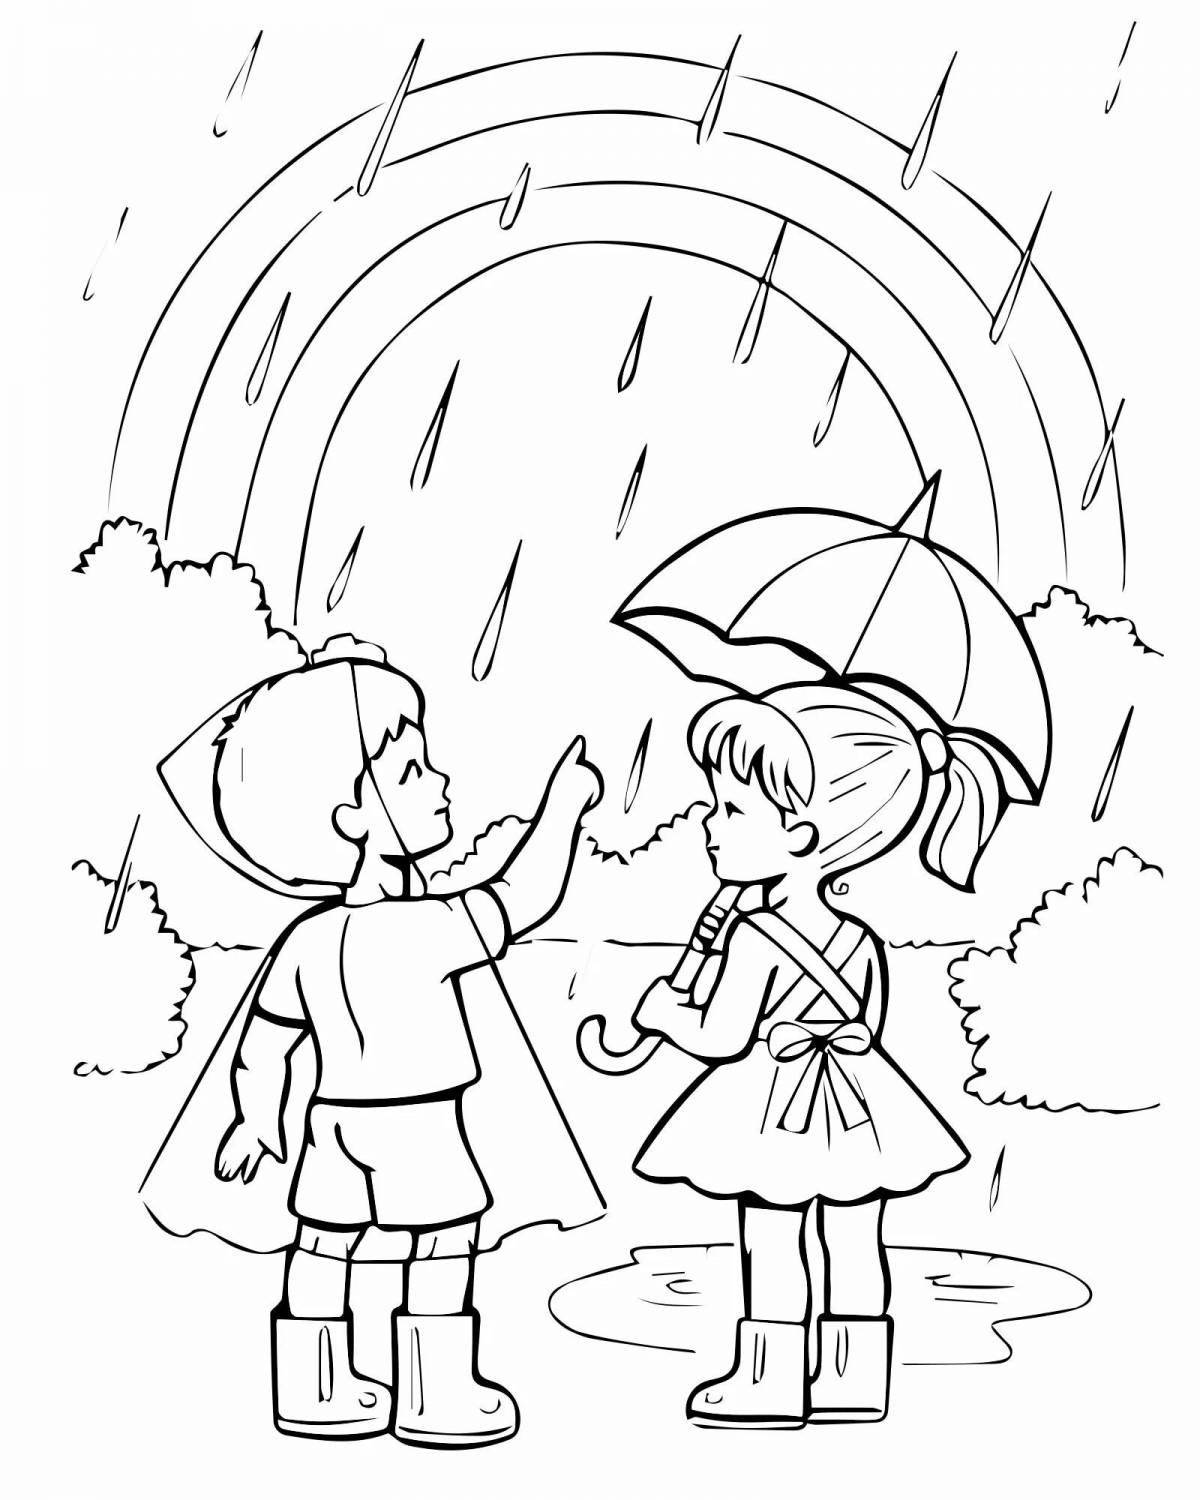 Joyful rain coloring pages for kids